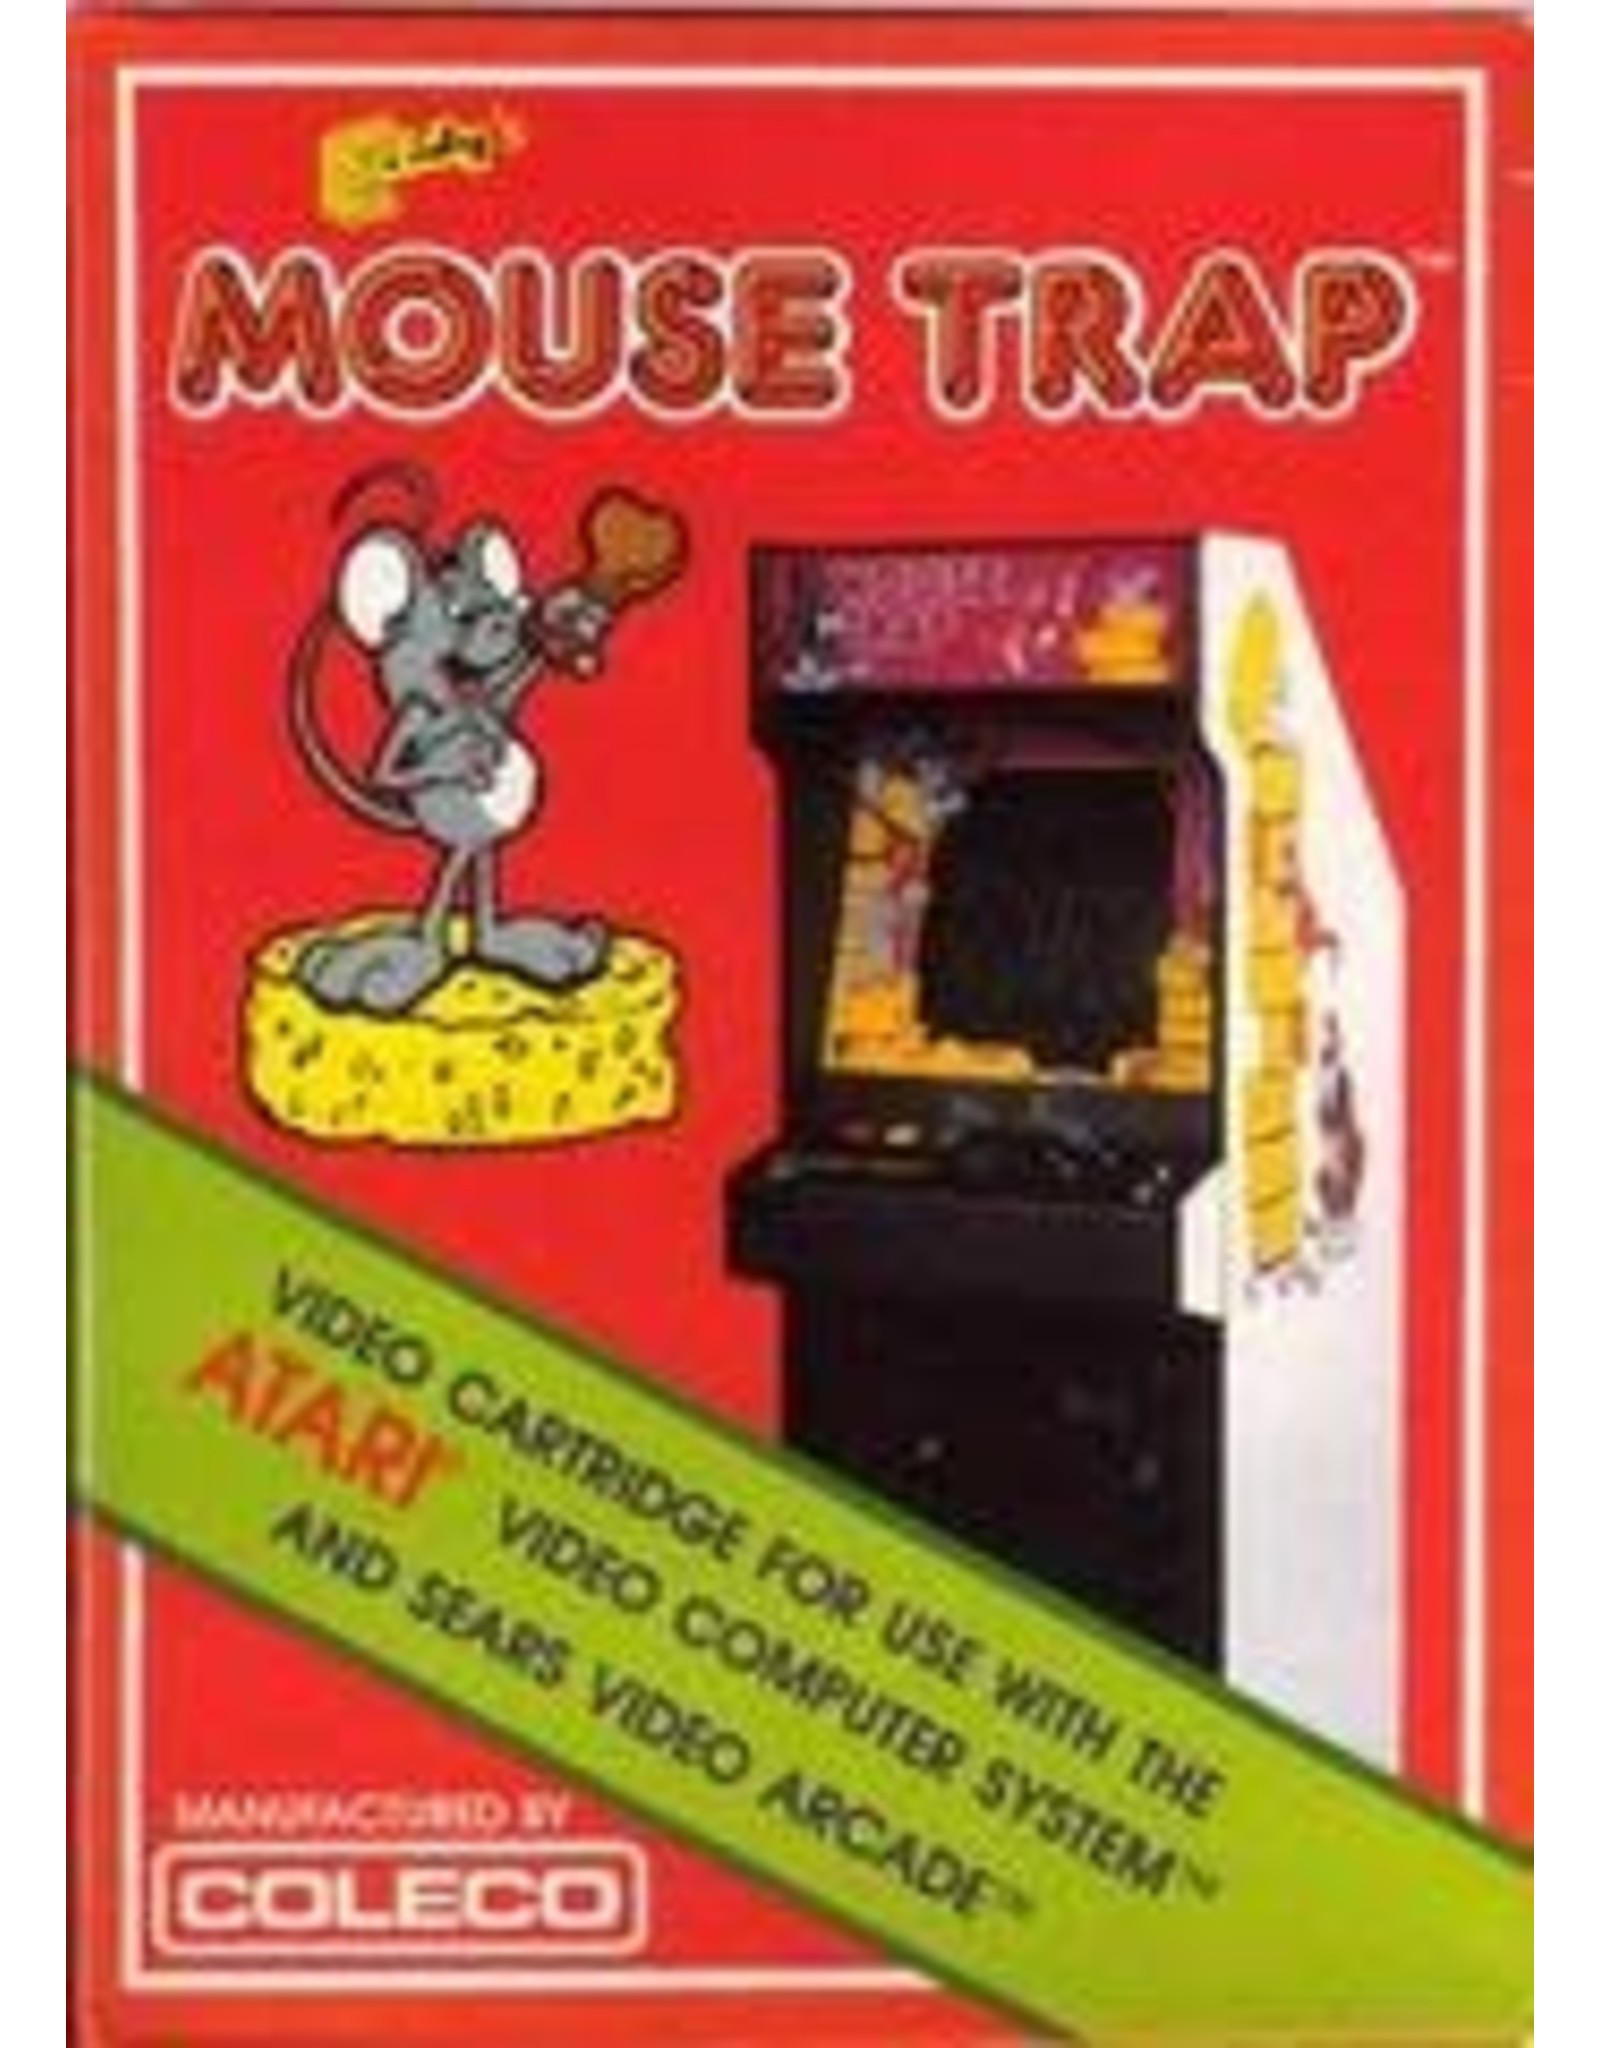 Atari 2600 Mouse Trap (Cart Only, Damaged Label)